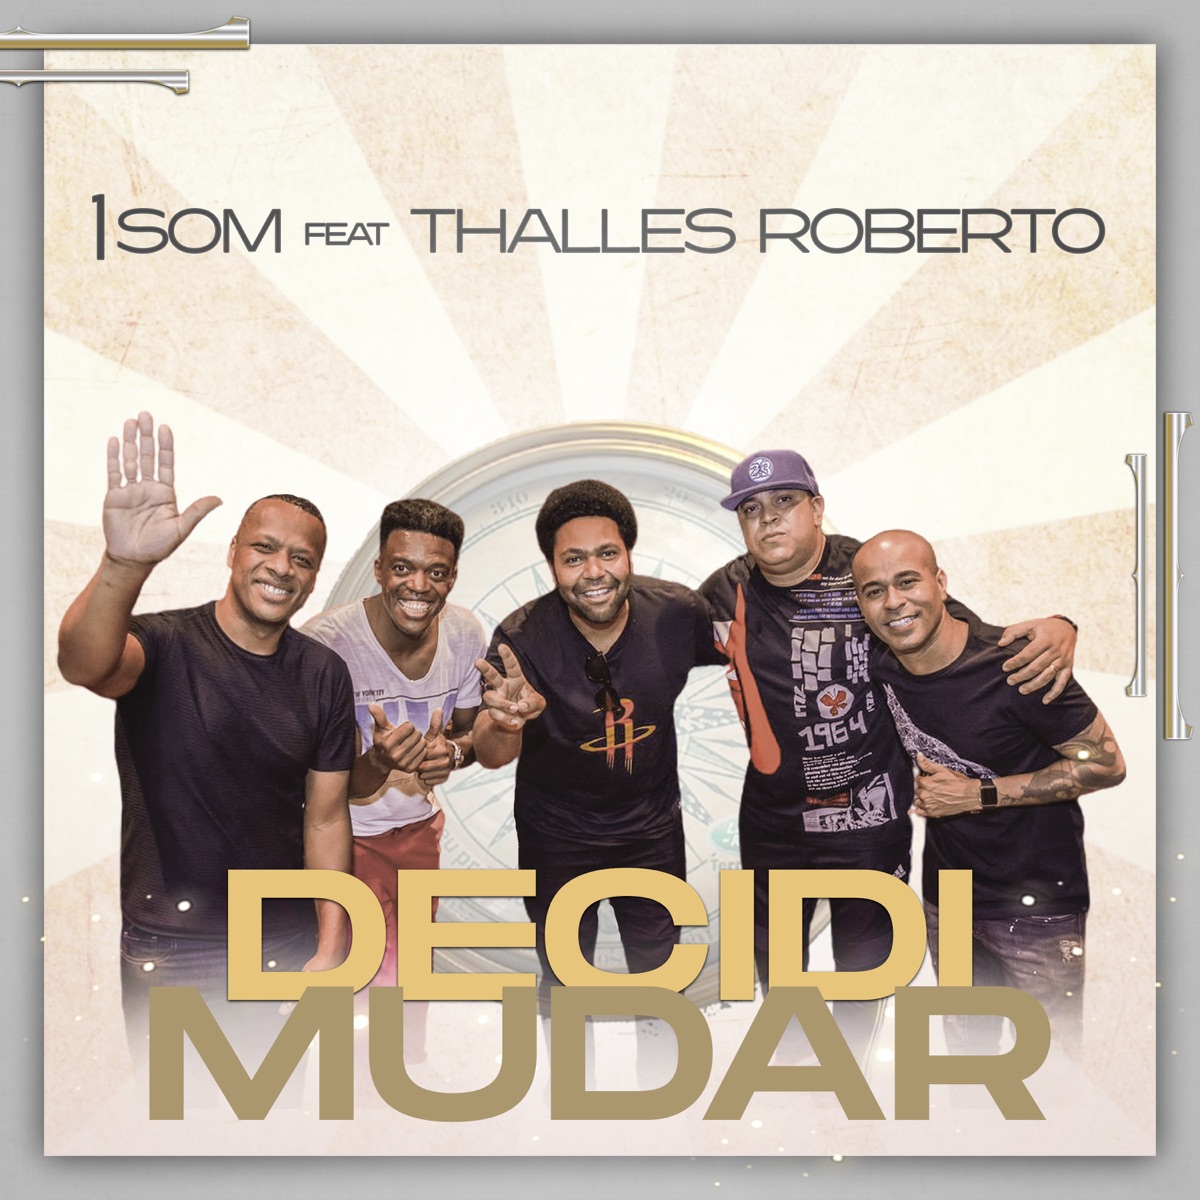 Decidi Mudar (feat. Thalles Roberto) - Single” álbum de Ministerio 1SOM en  Apple Music